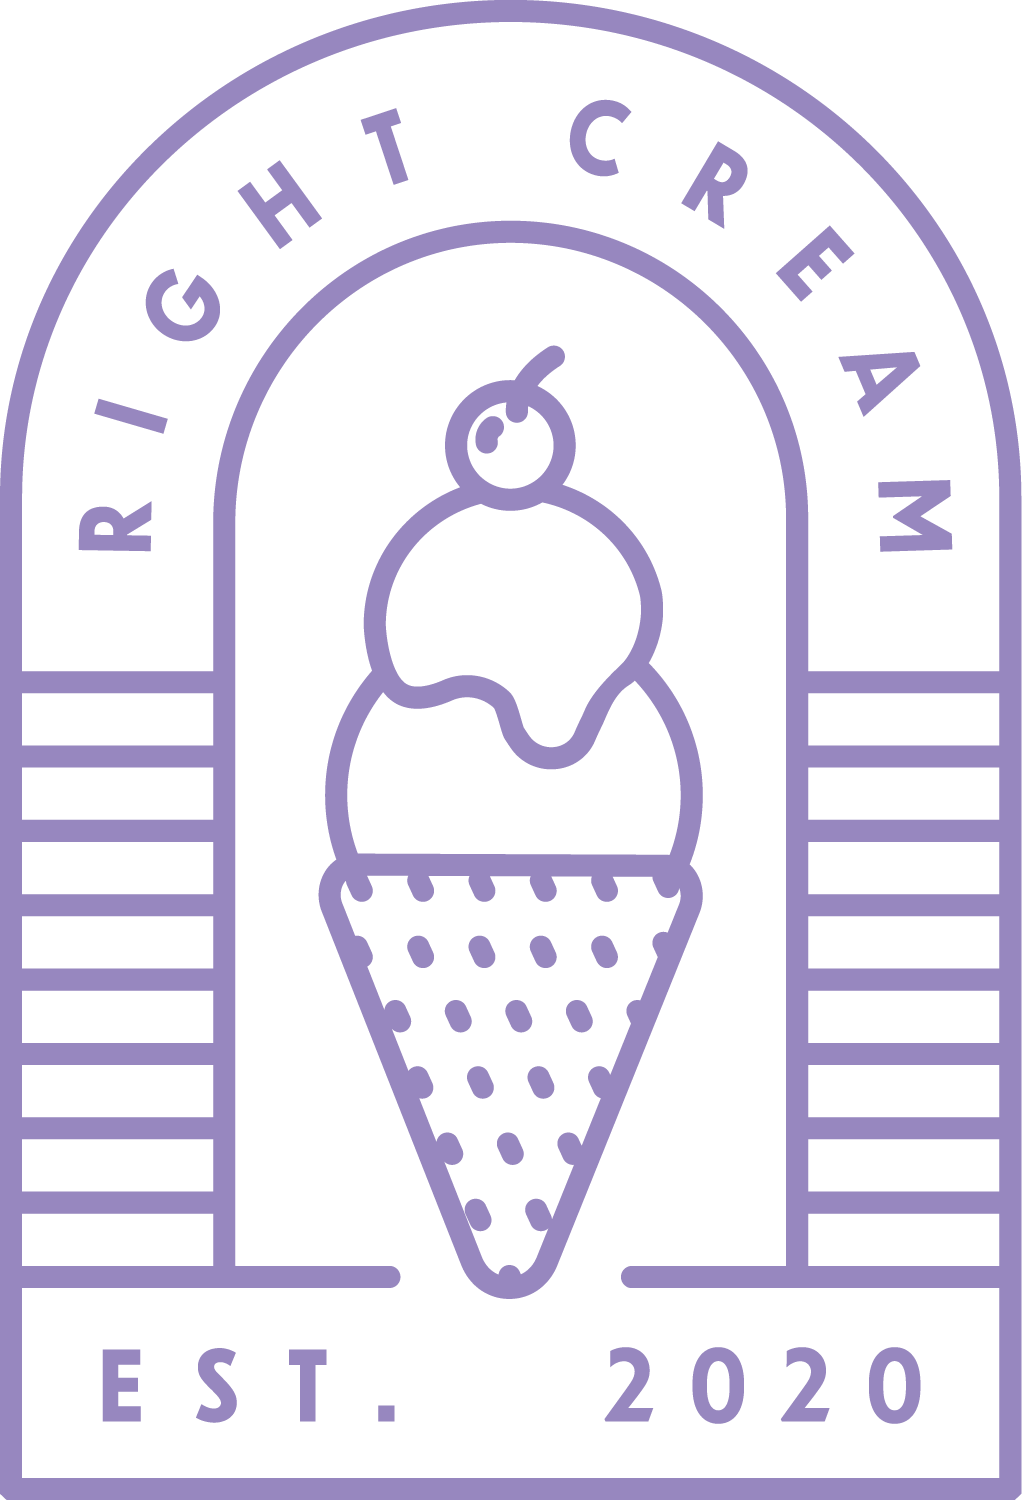 ice cream shops logos